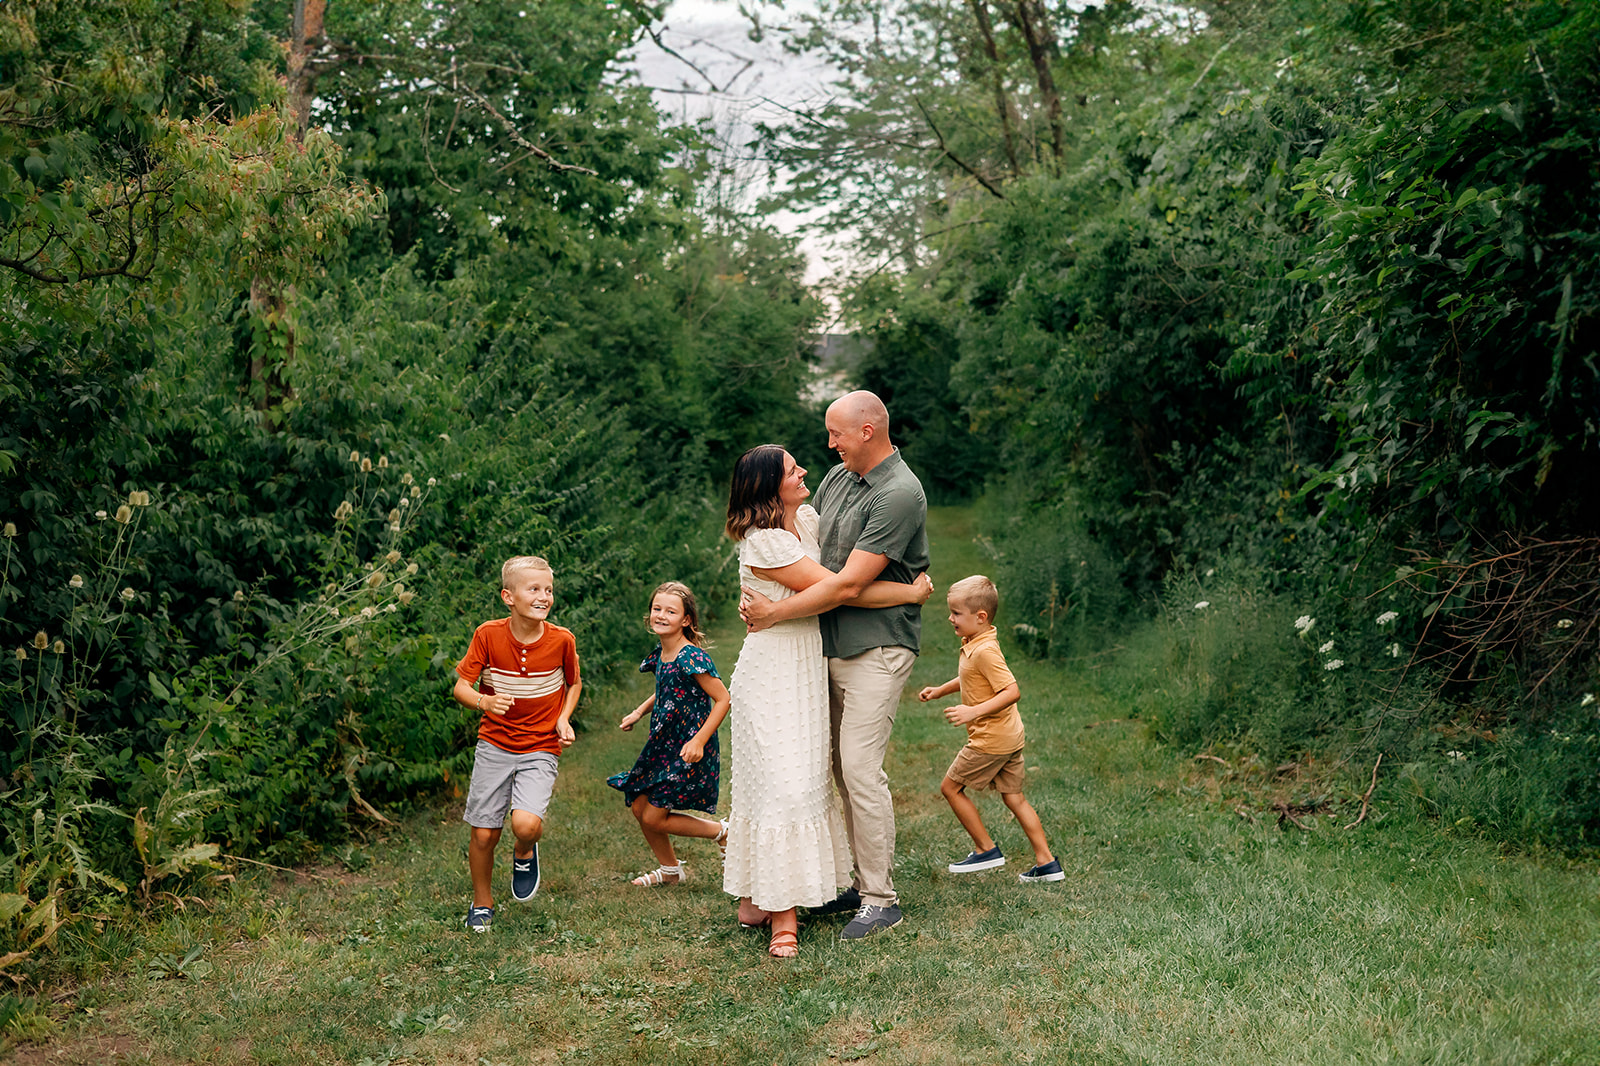 Family sharing a joyful group hug in an outdoor setting.